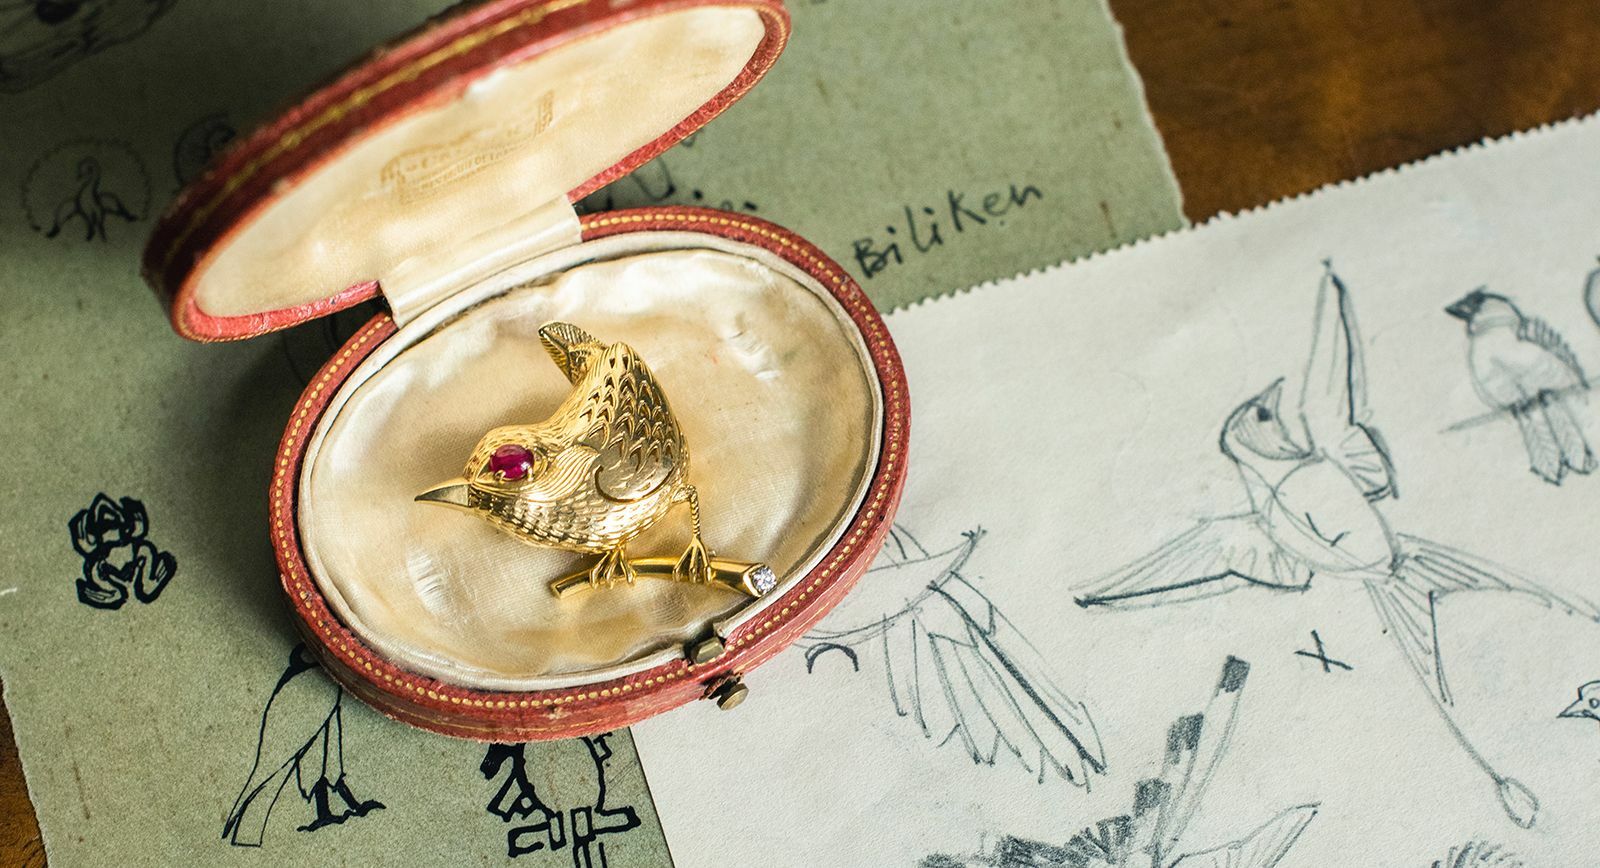 Cartier bird brooch with original archive sketches